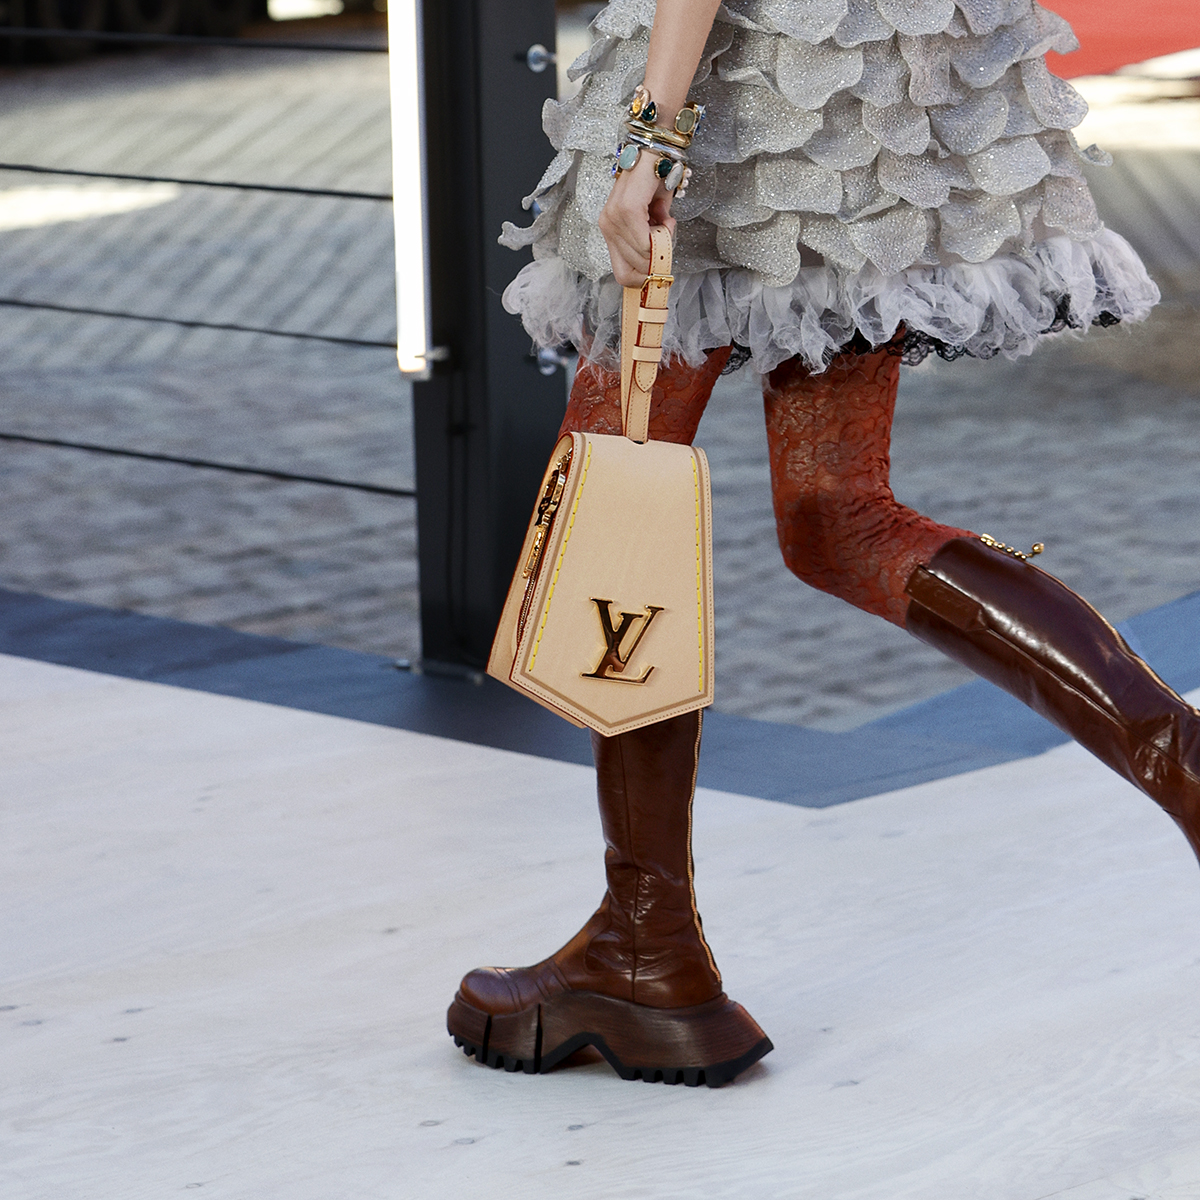 Louis Vuitton on X: Taking #LouisVuitton's iconic leather details